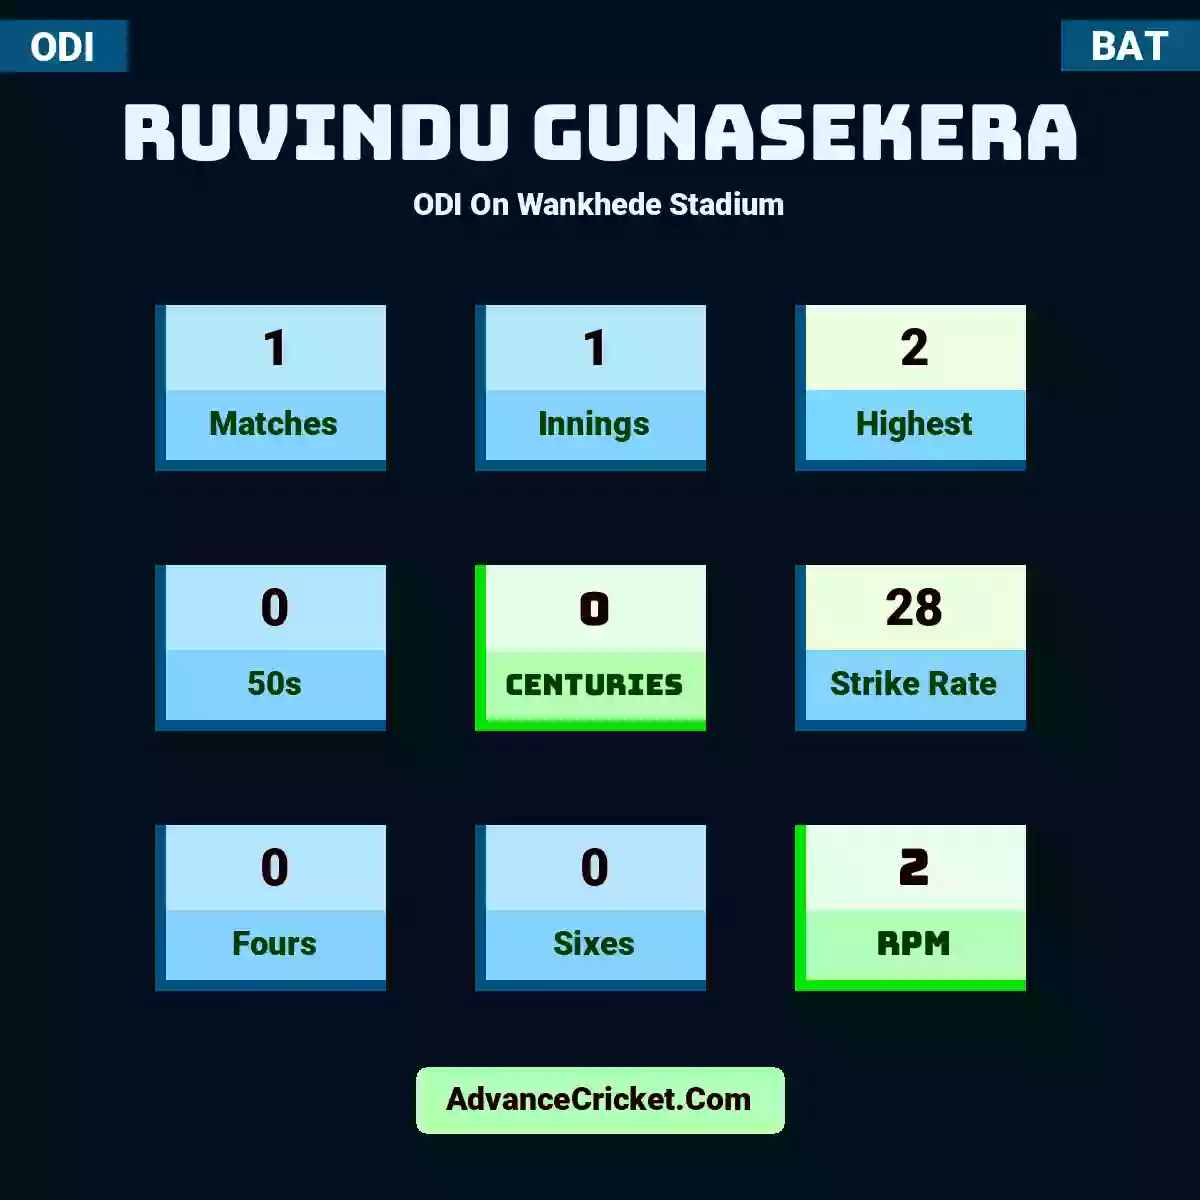 Ruvindu Gunasekera ODI  On Wankhede Stadium, Ruvindu Gunasekera played 1 matches, scored 2 runs as highest, 0 half-centuries, and 0 centuries, with a strike rate of 28. R.Gunasekera hit 0 fours and 0 sixes, with an RPM of 2.